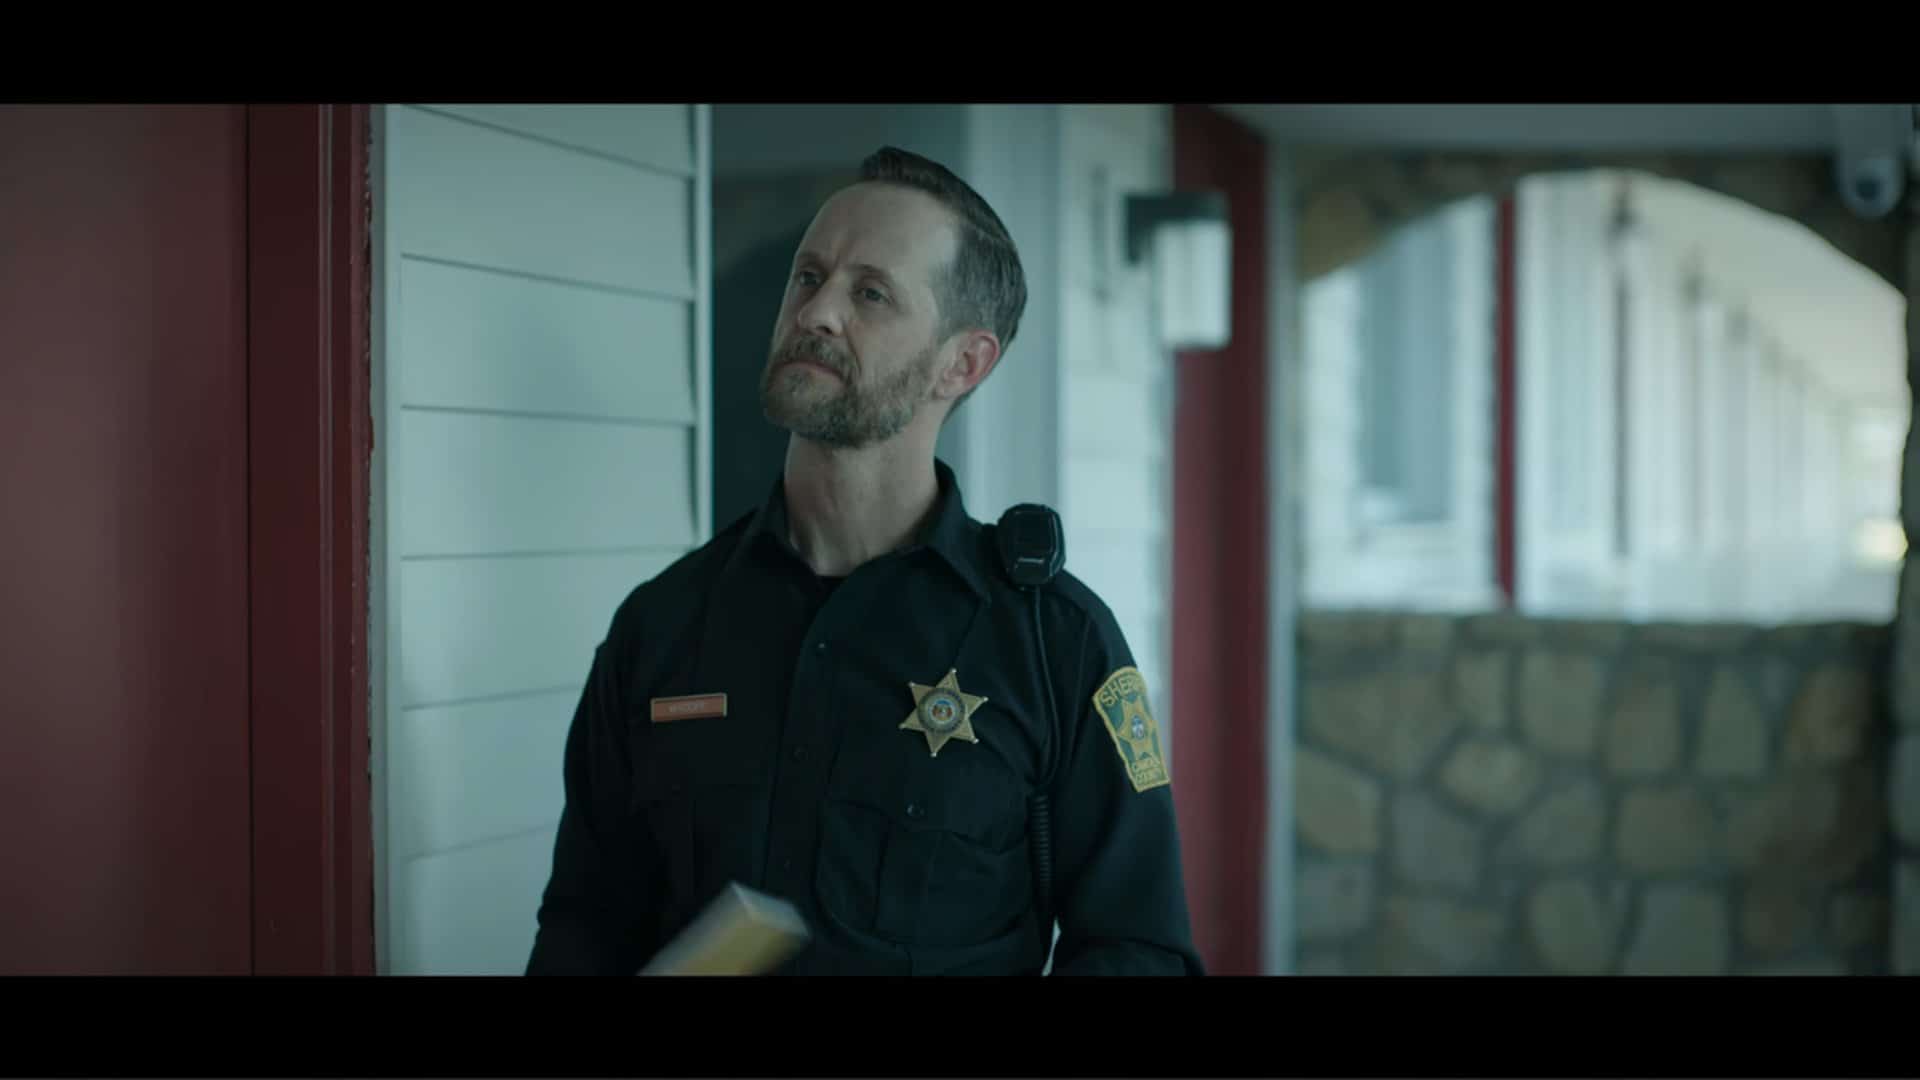 Deputy Wycoff (Brad Carter) upset his interrogation got stopped